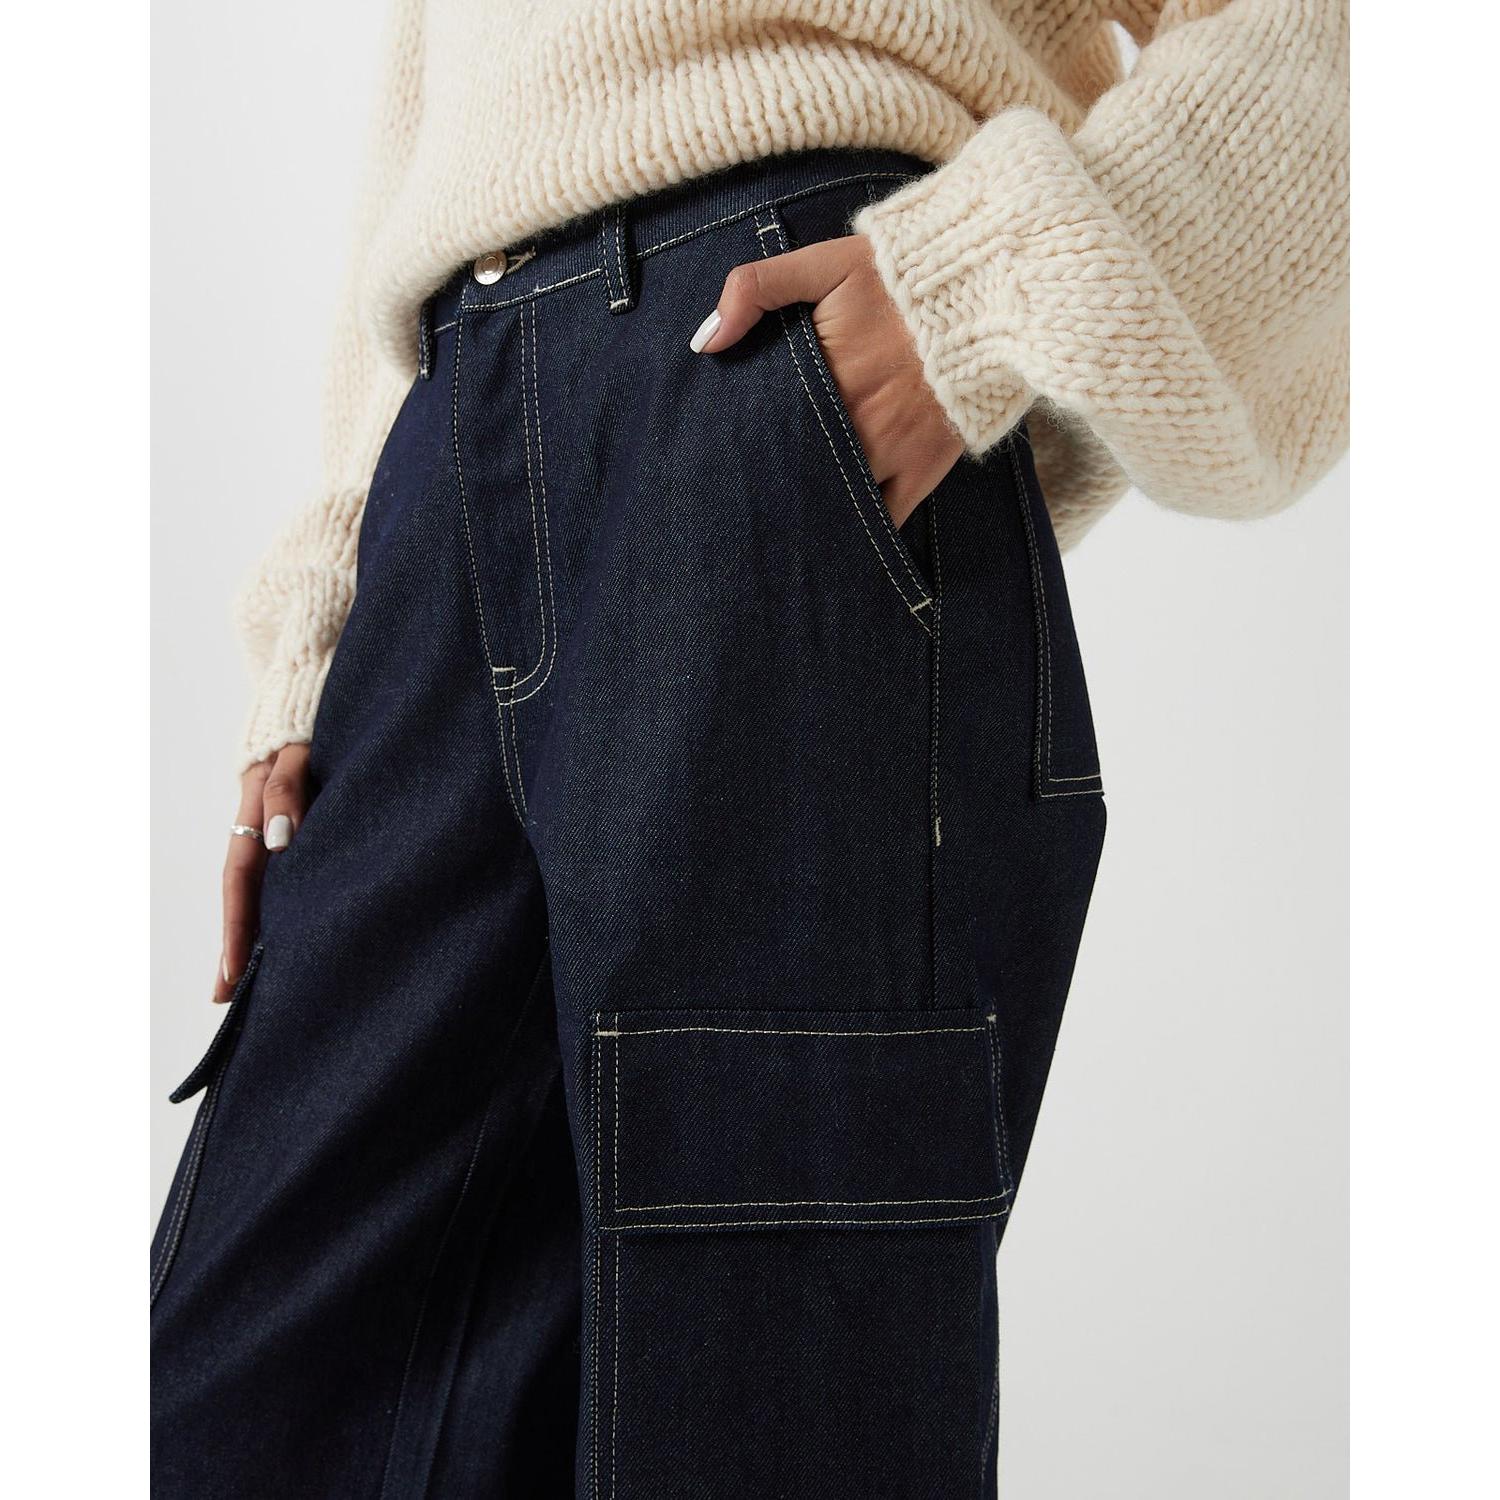 Minimum - Astas Straight Jean in Dark Indigo-SQ4393366